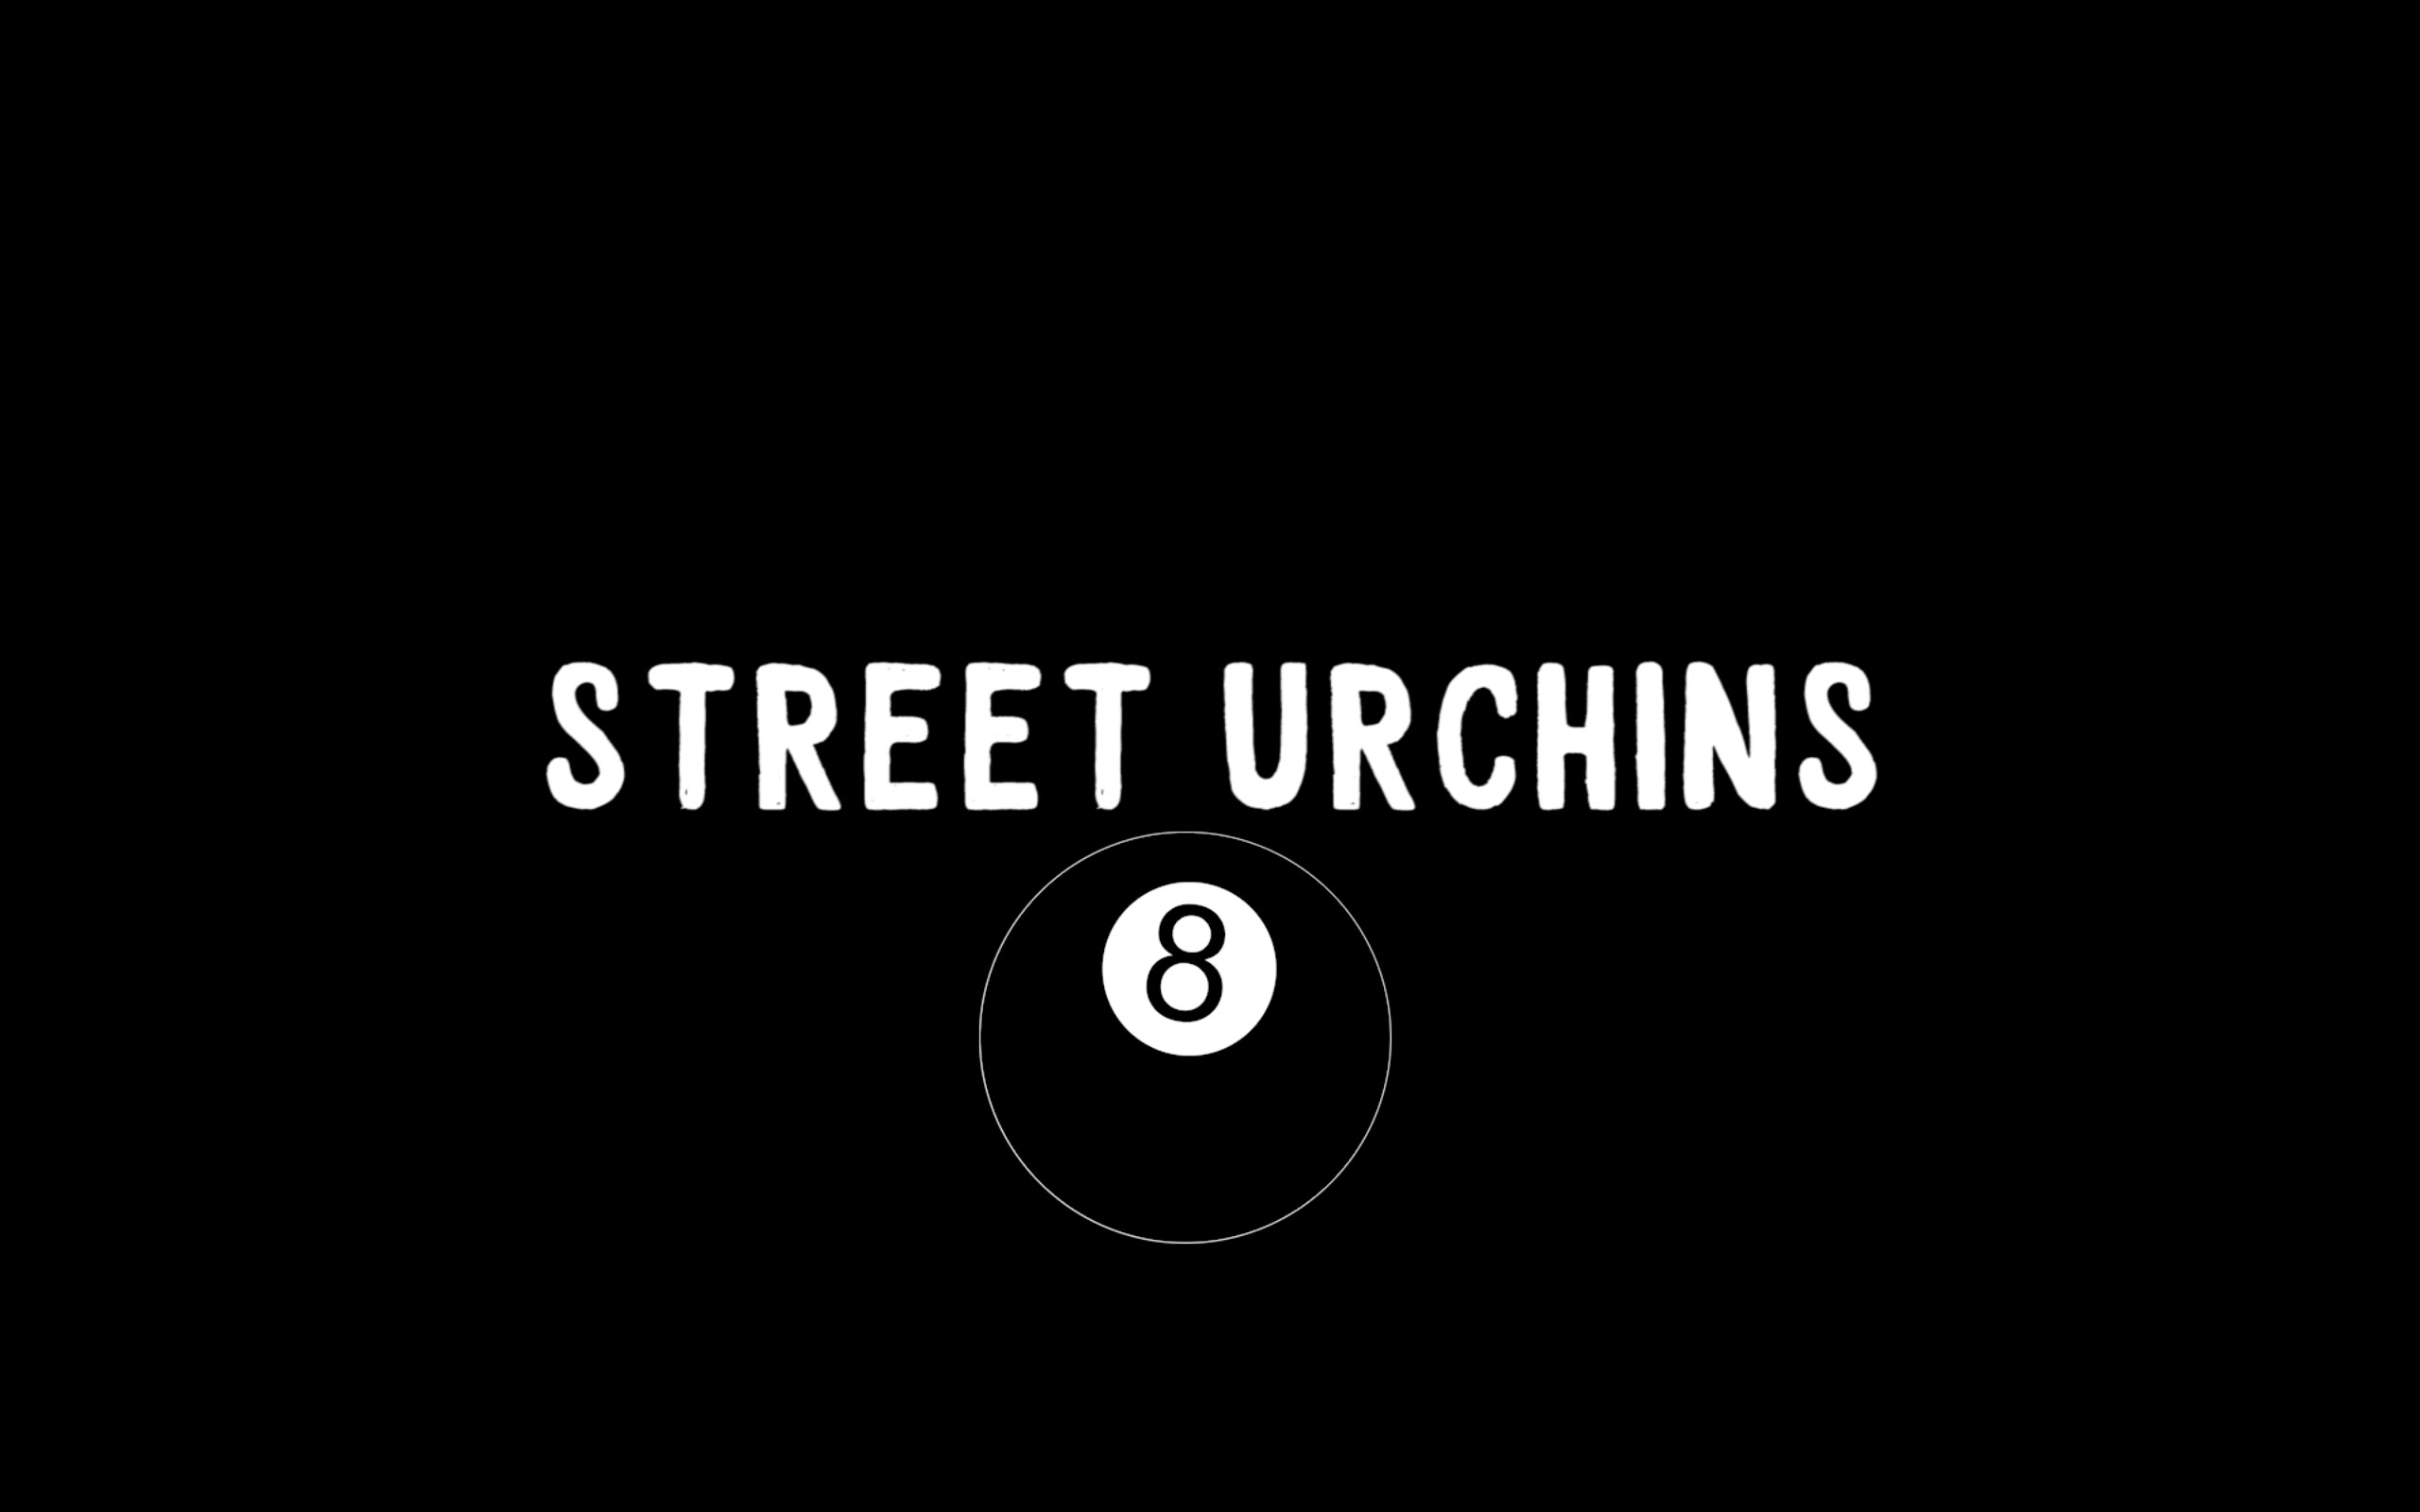 Full Video: Street Urchins 8 (2016)